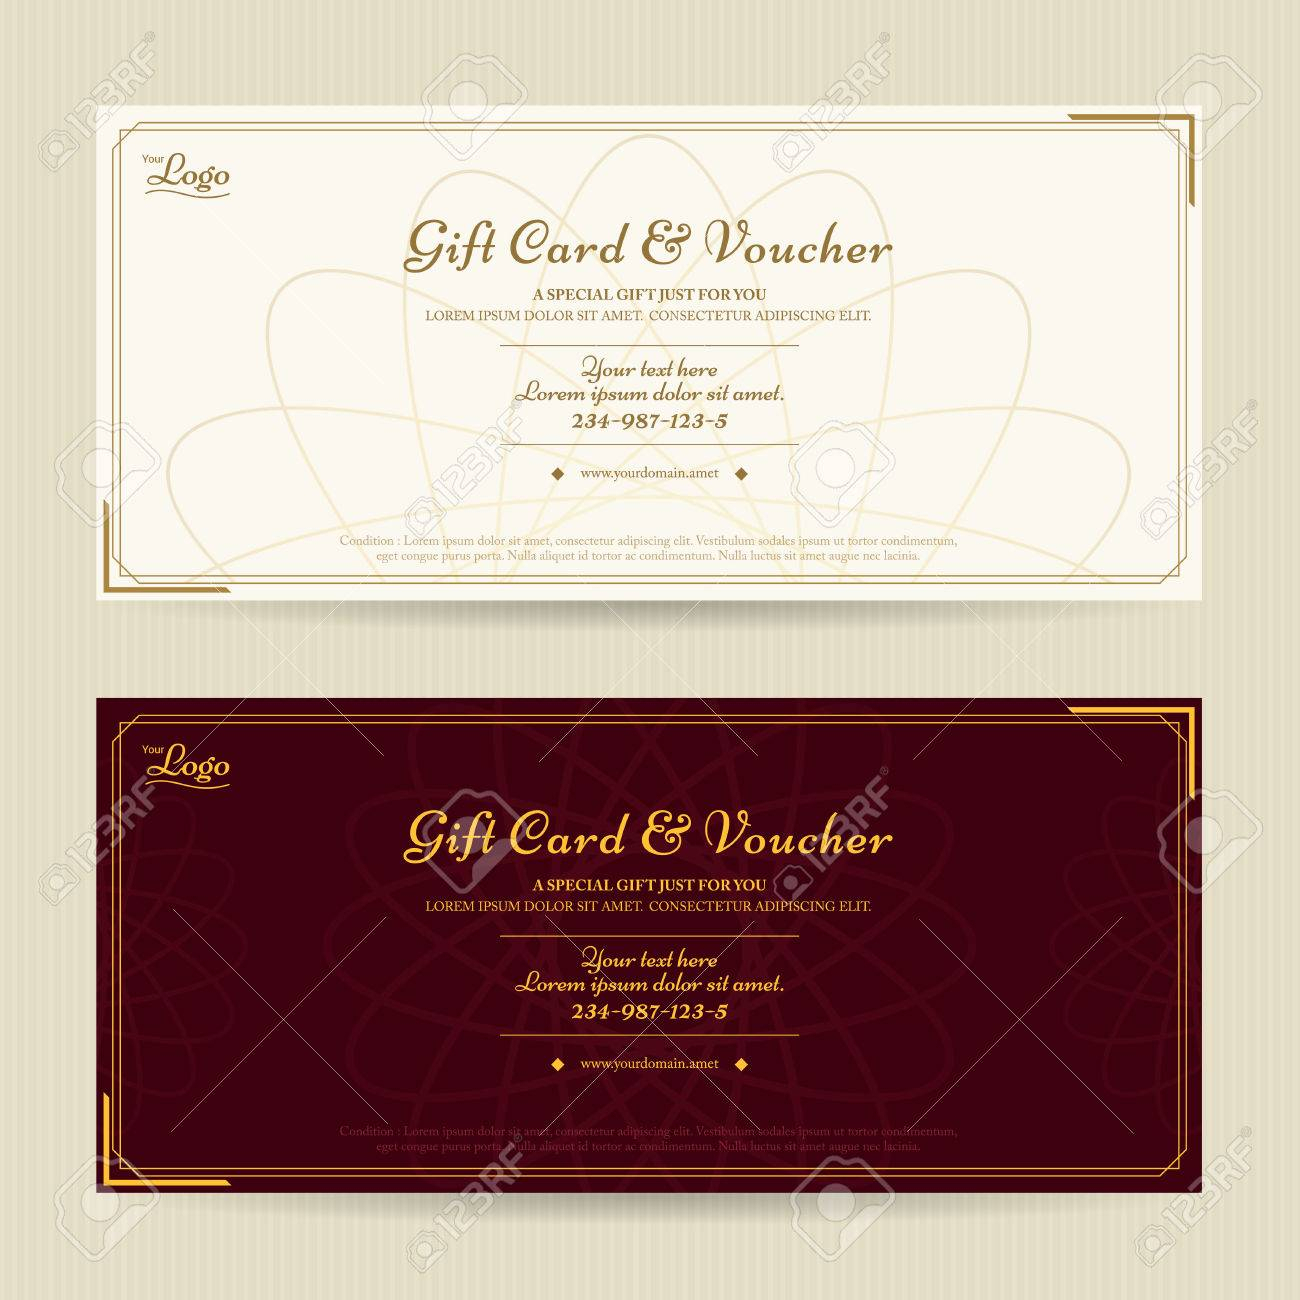 Elegant Gift Voucher Or Gift Card Template With Gold Border With Elegant Gift Certificate Template